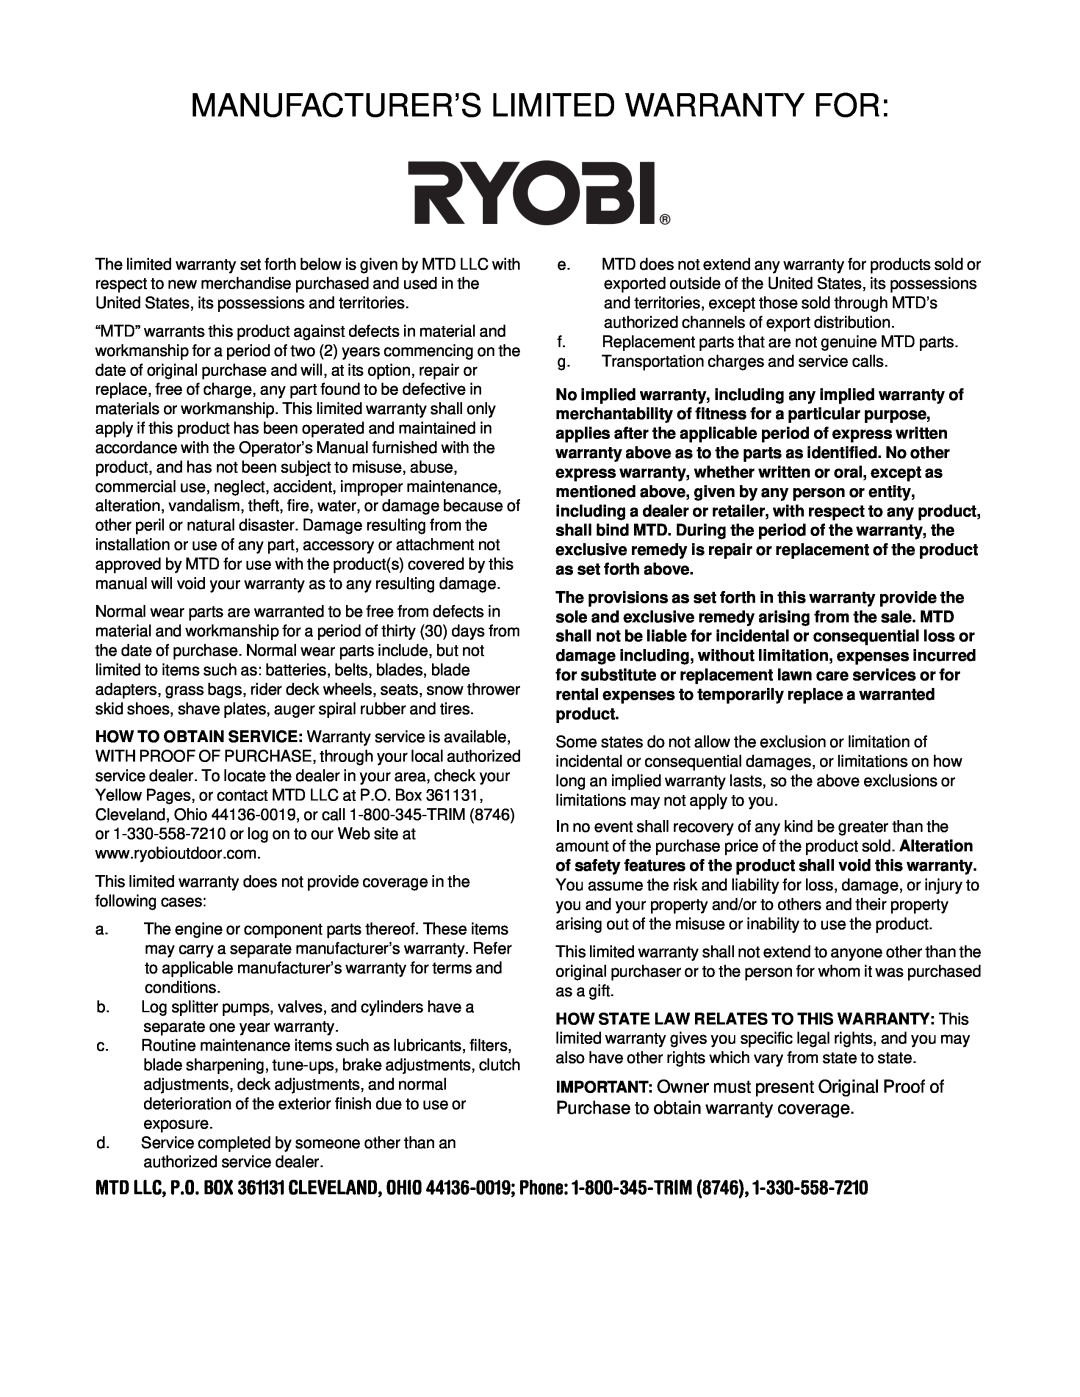 Ryobi 454 manual Manufacturer’S Limited Warranty For 